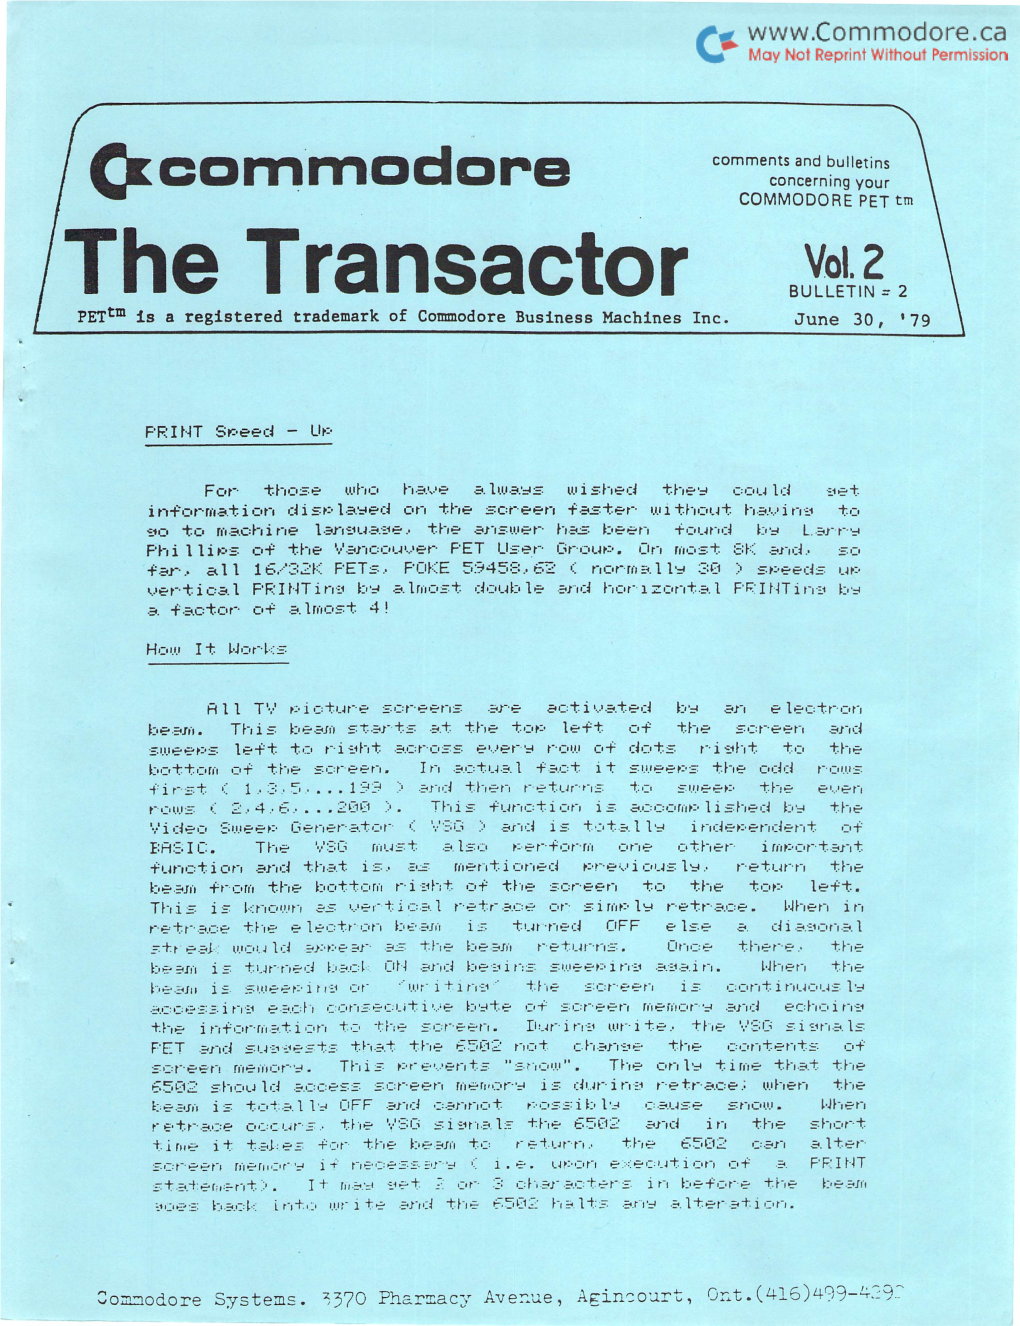 The Transactor Vol.2 BULLETIN = 2